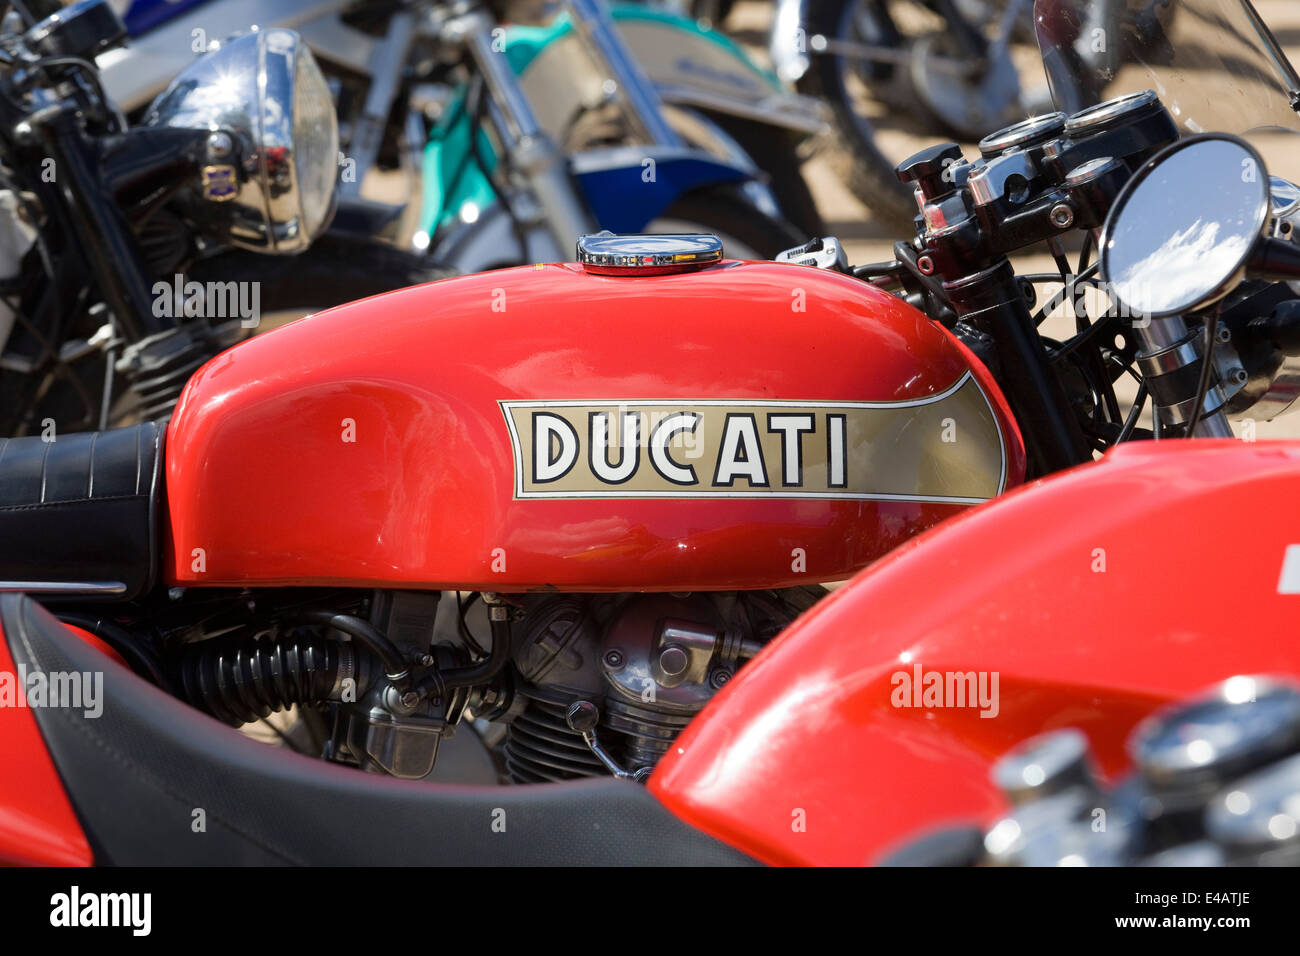 Ducati Motorcycle on display Stock Photo